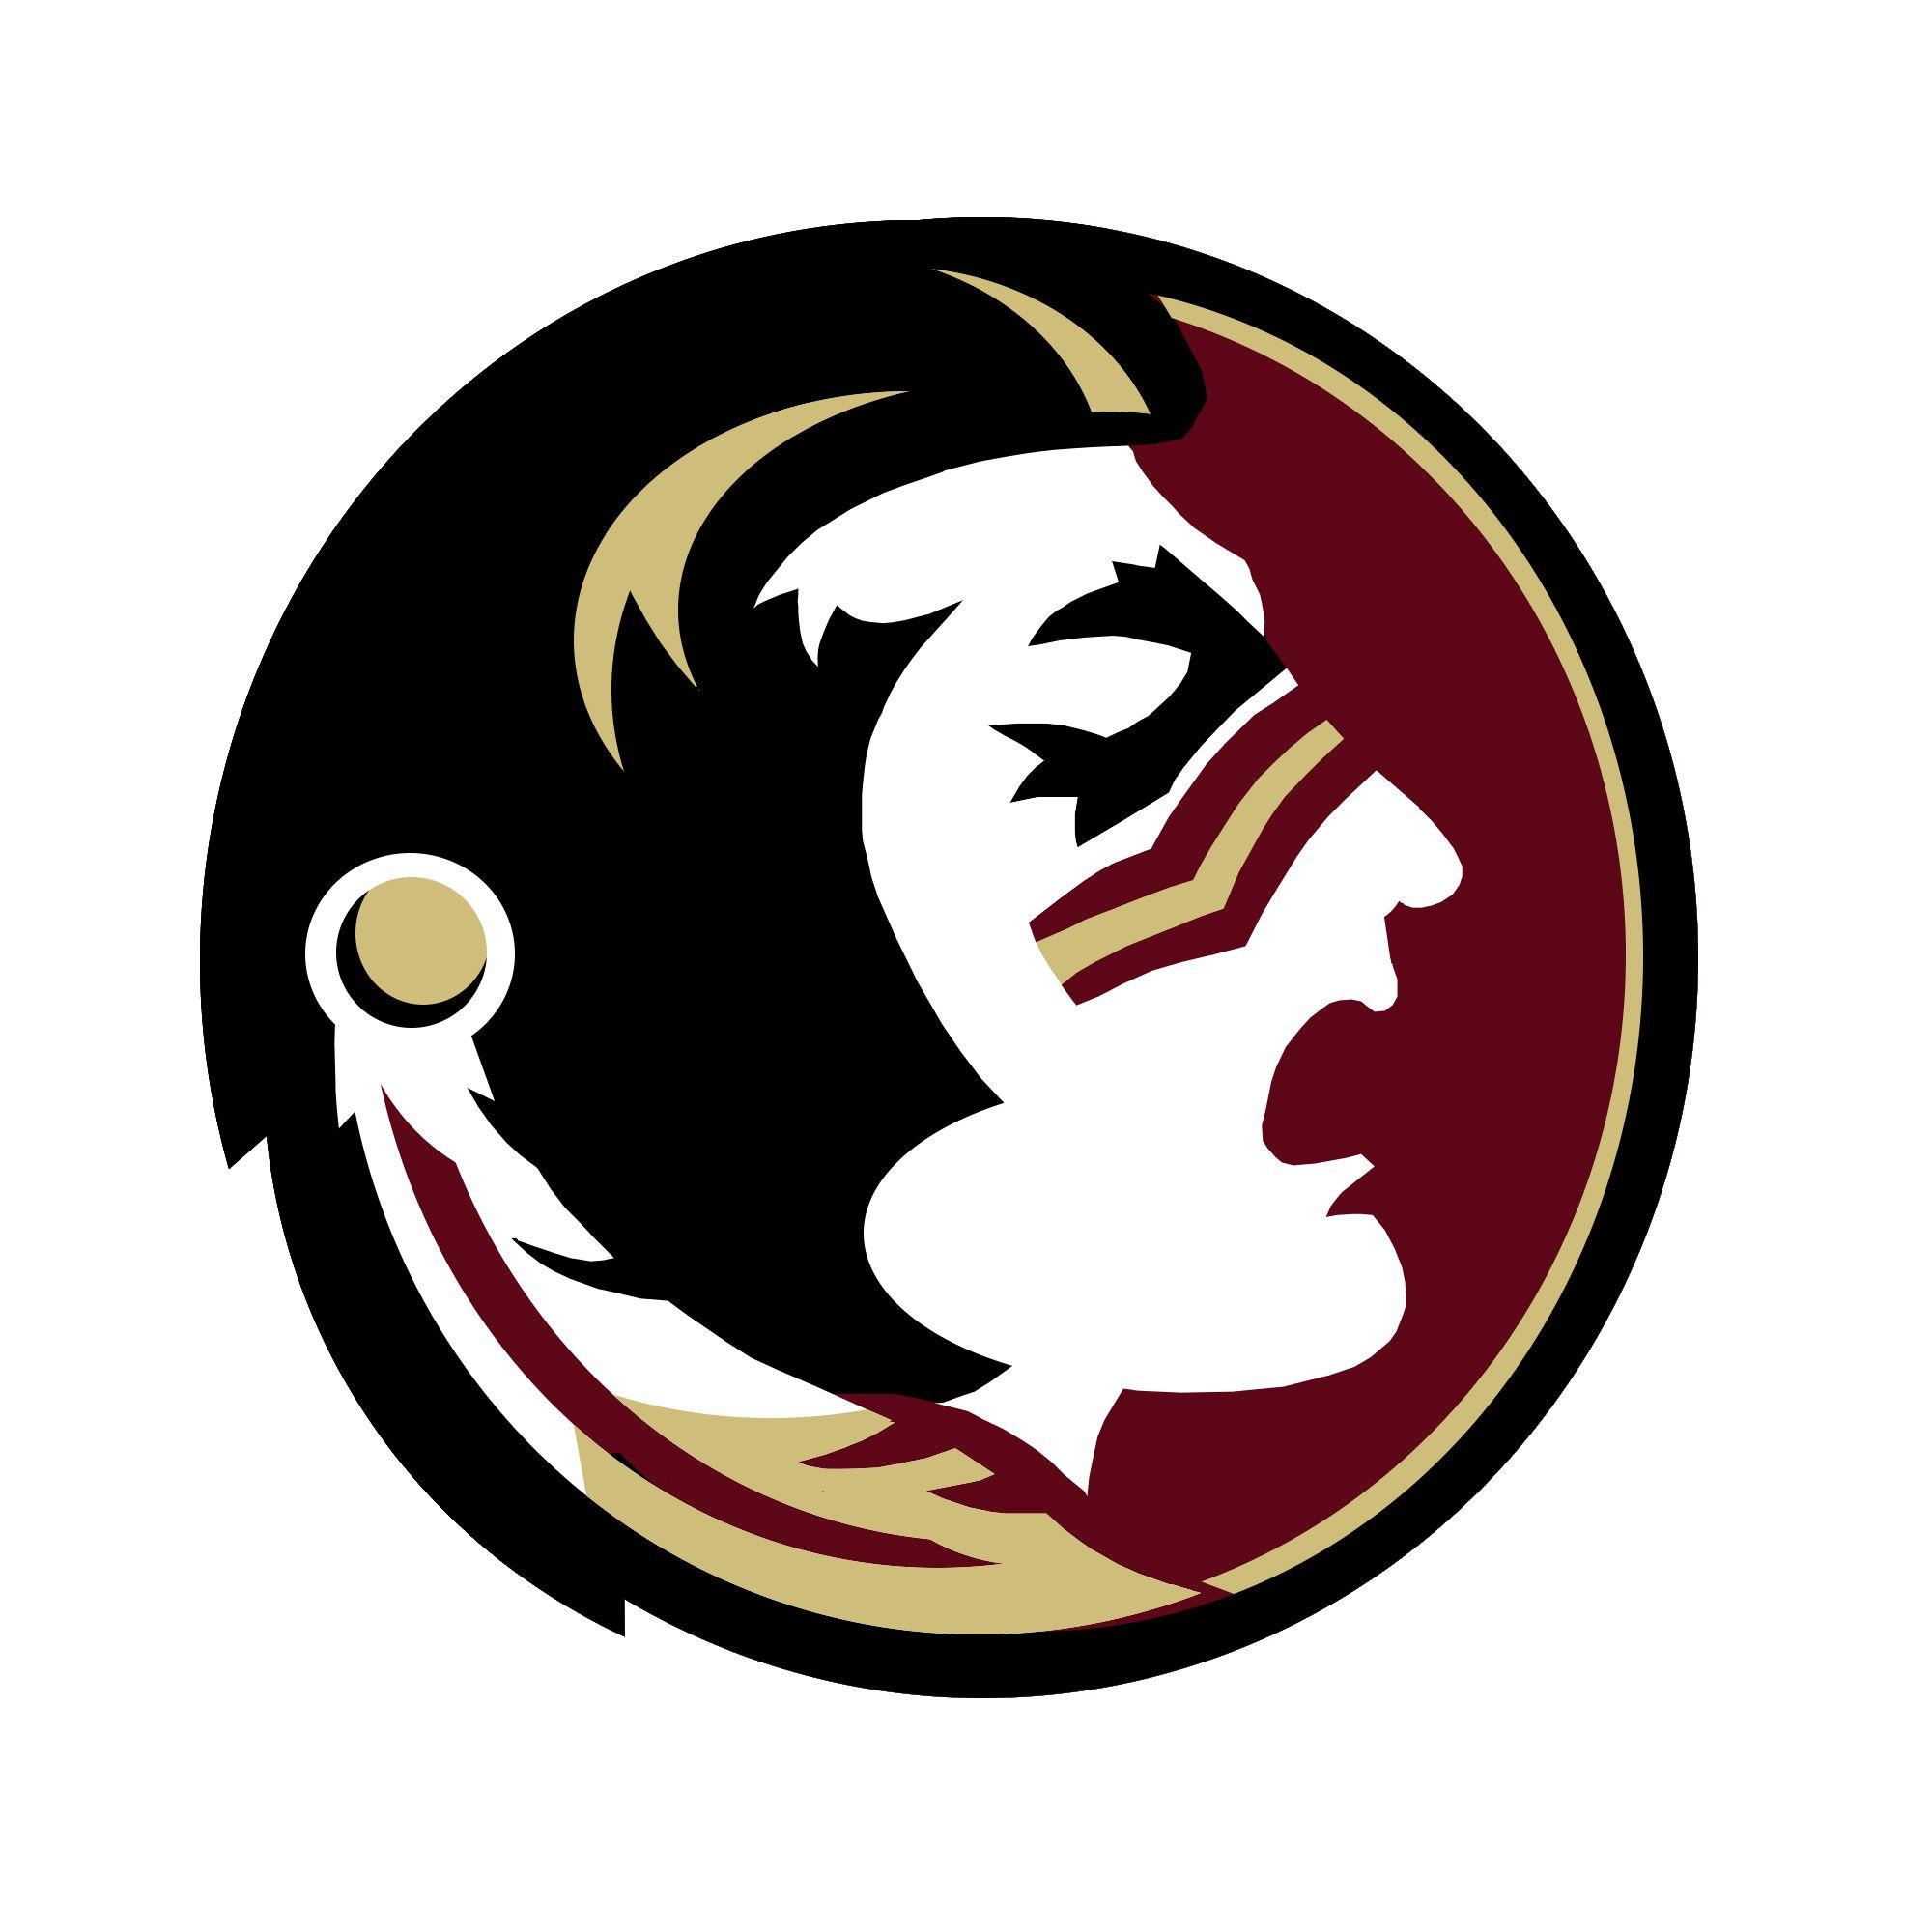 Florida State Football Logo - Updated Florida State Seminoles Logo - Concepts - Chris Creamer's ...